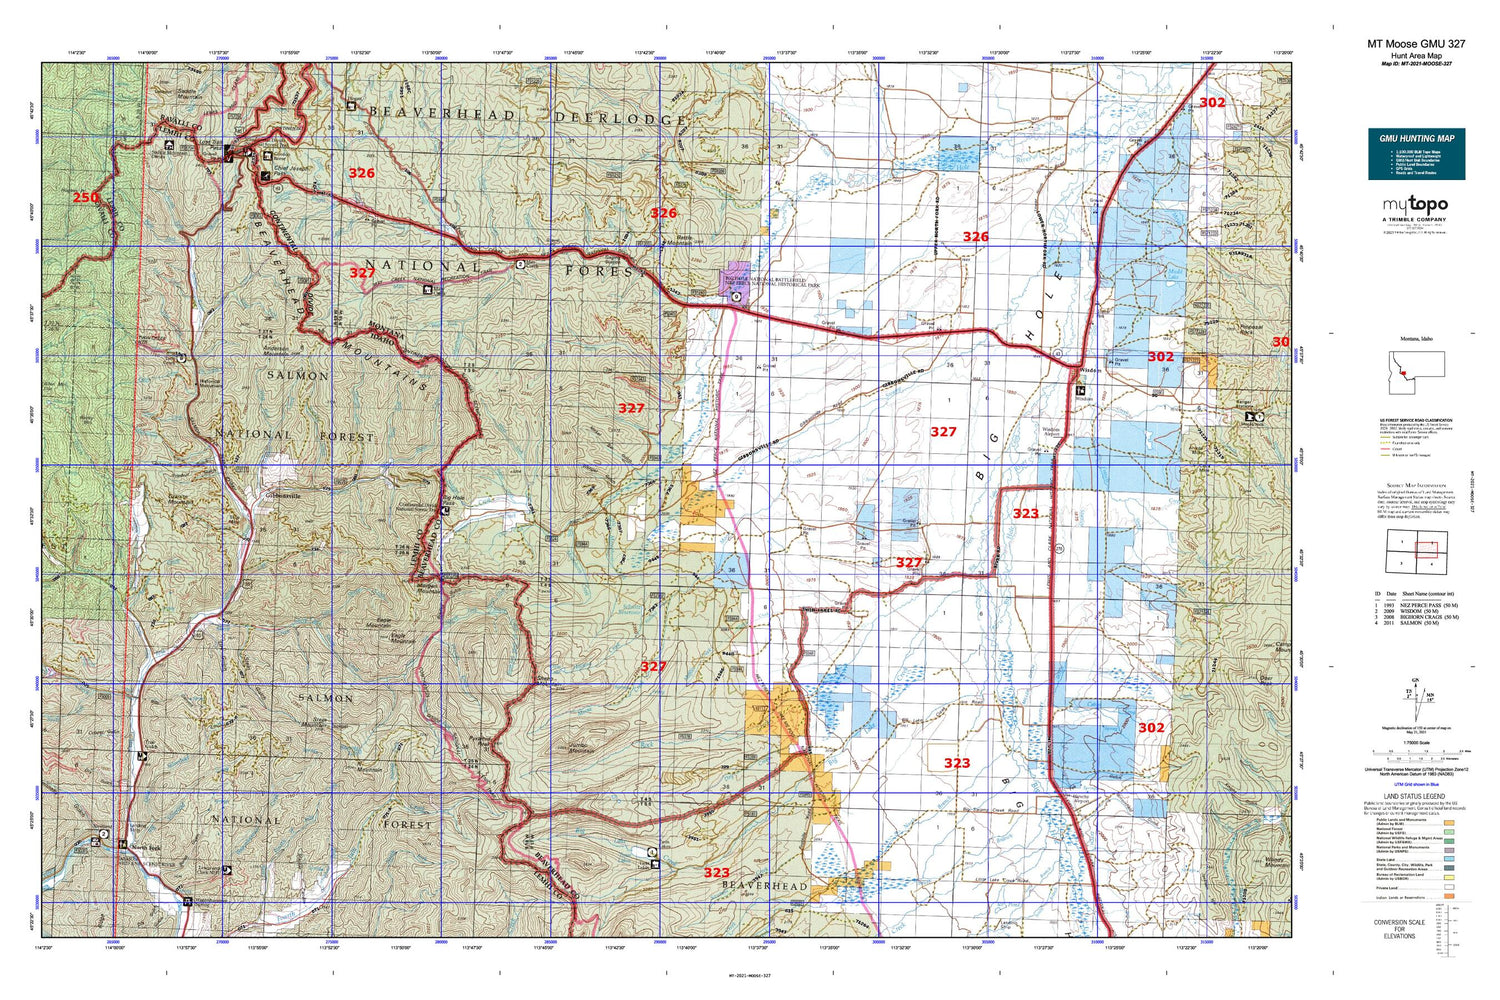 Montana Moose GMU 327 Map Image